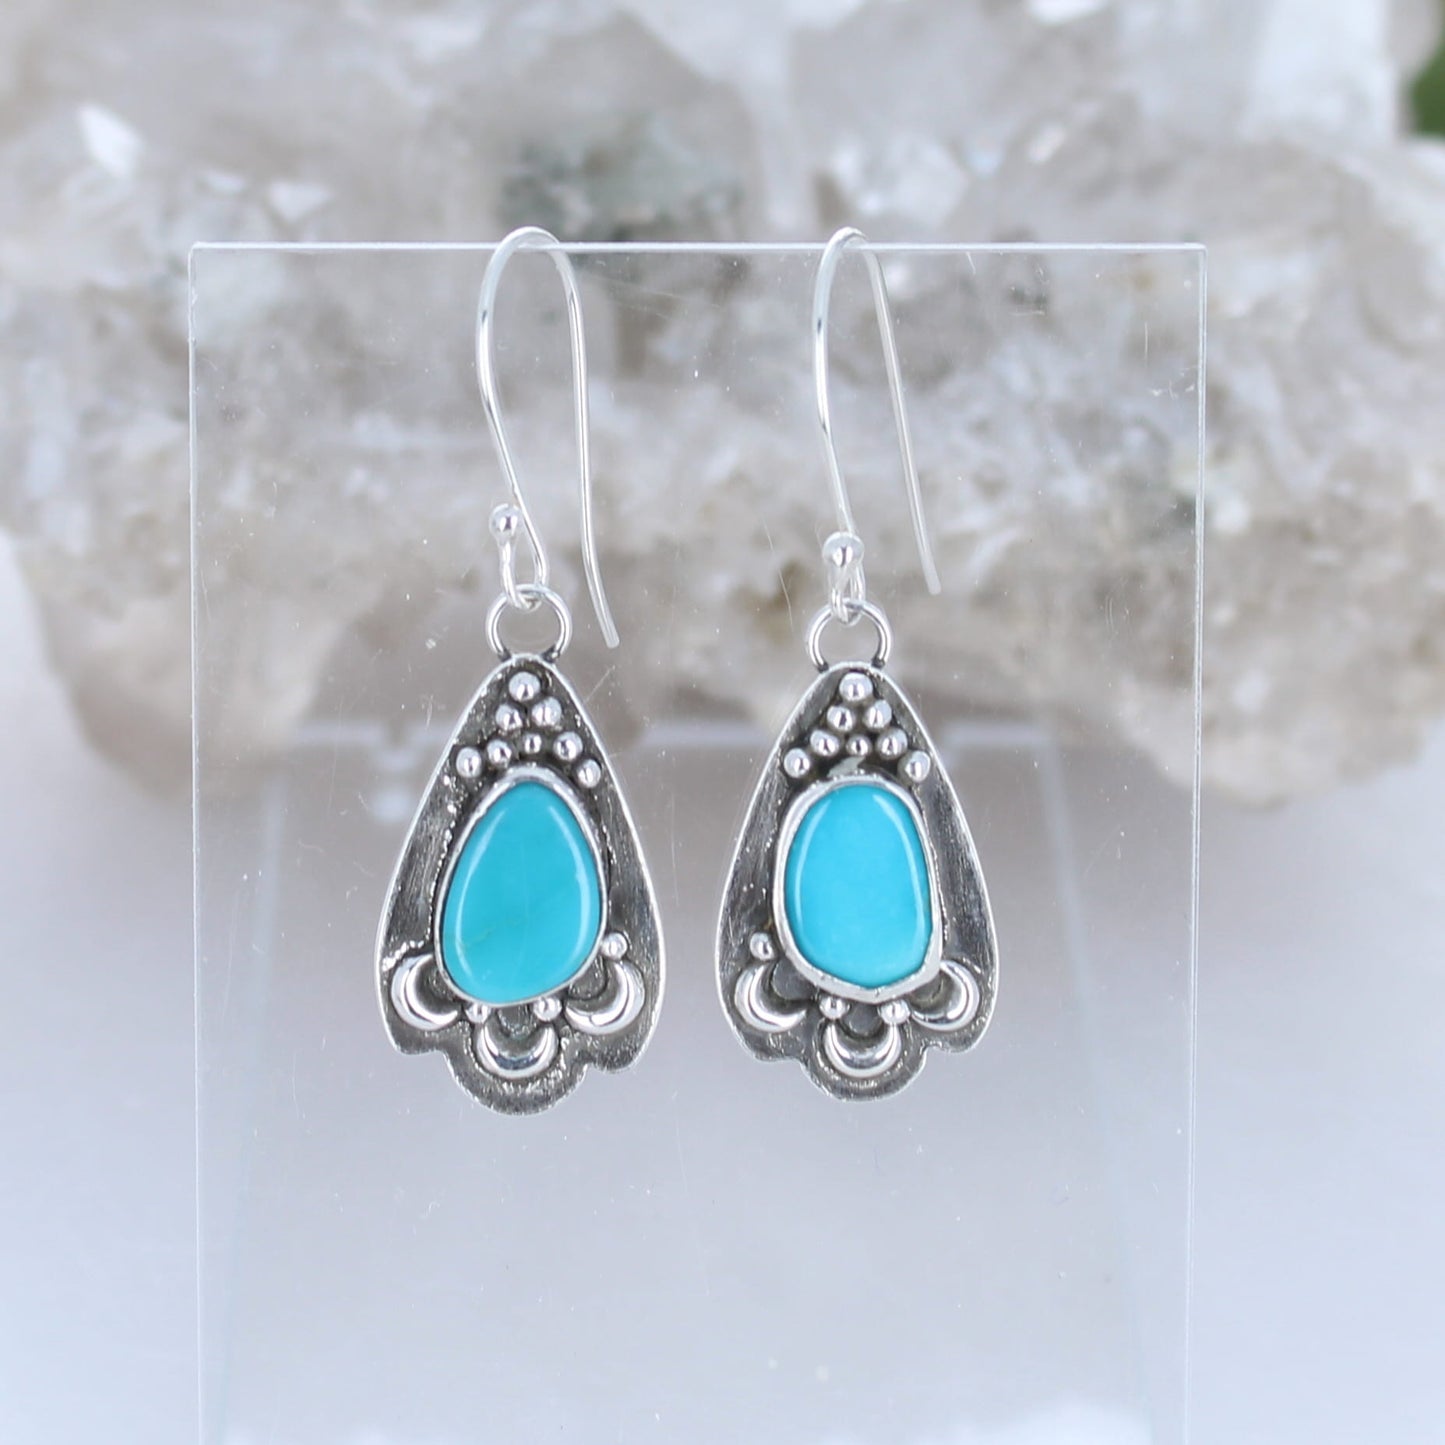 Beautiful Sky Blue Kingman Turquoise Earrings Teardrops with Moon Design